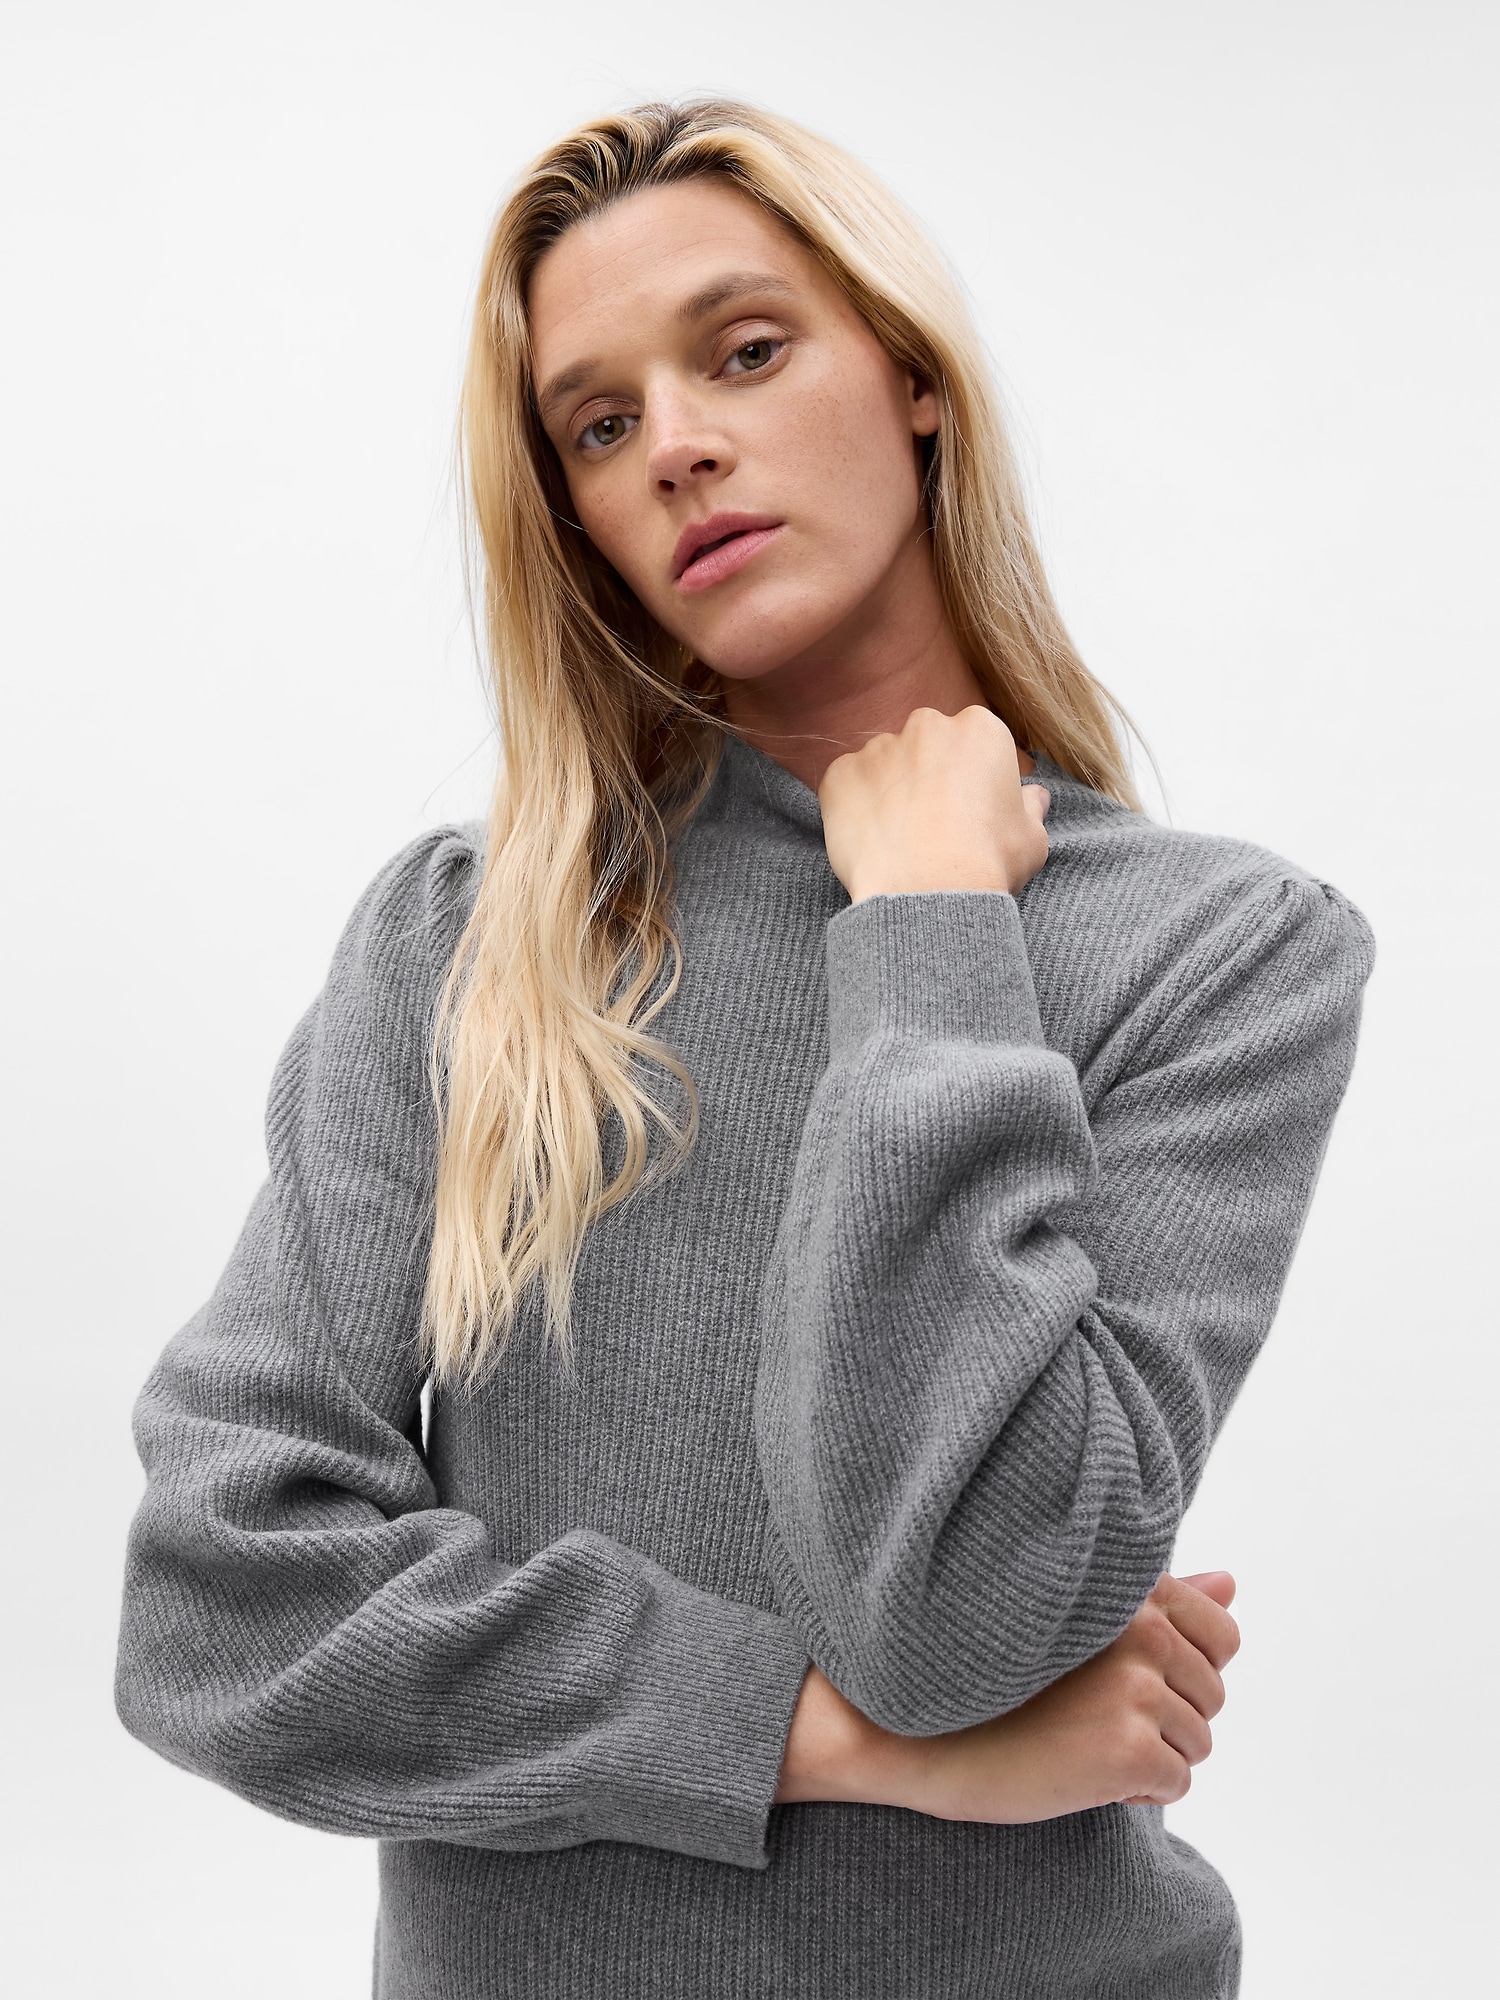 How to Wear a Grey Turtleneck Sweater Dress